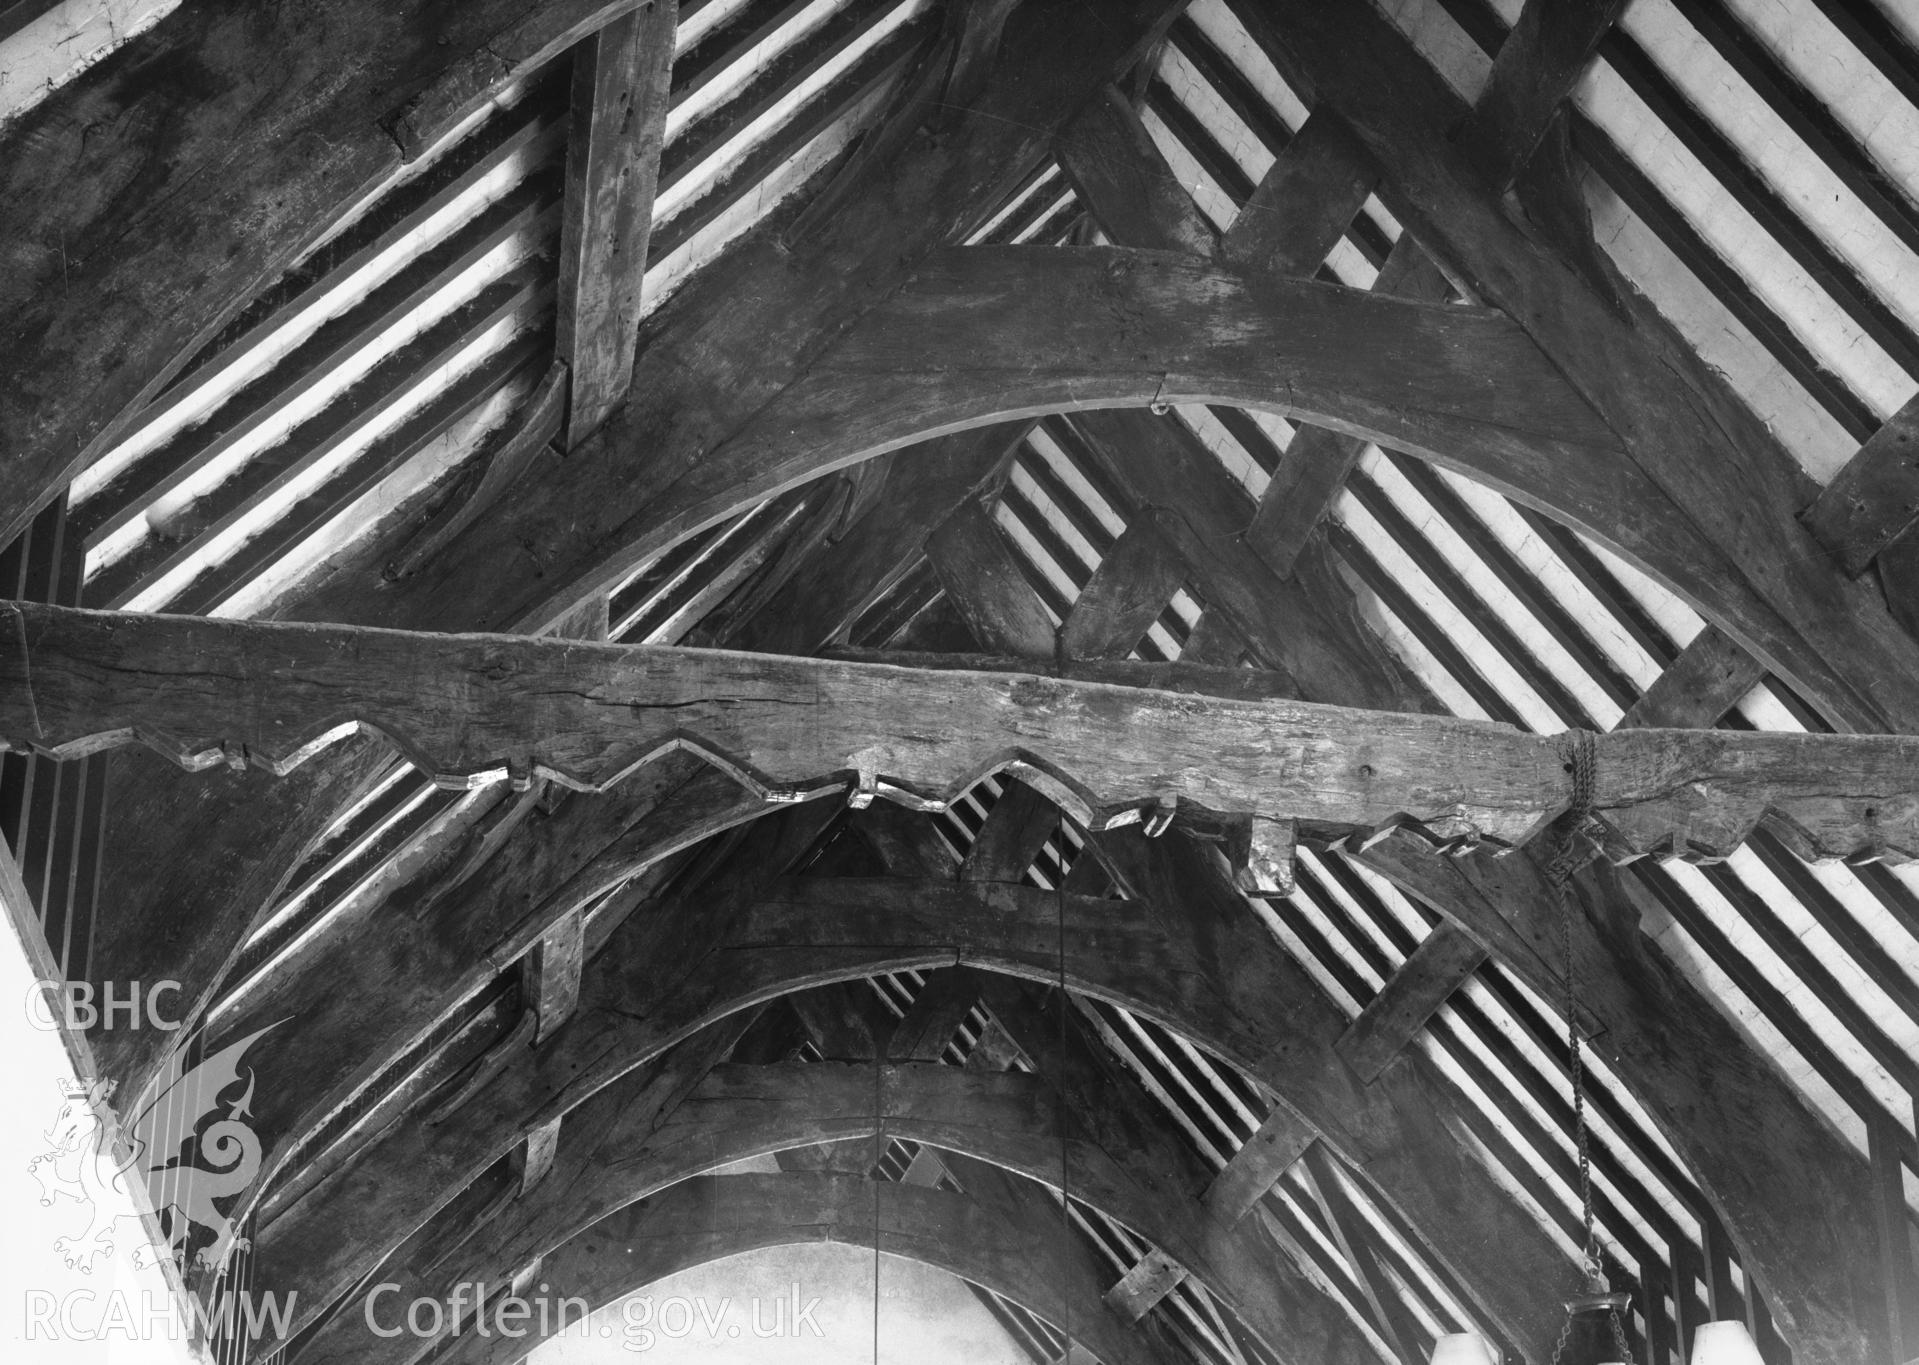 Roof detail at St Brothen's Church, Llanfrothen taken 07.06.1941.